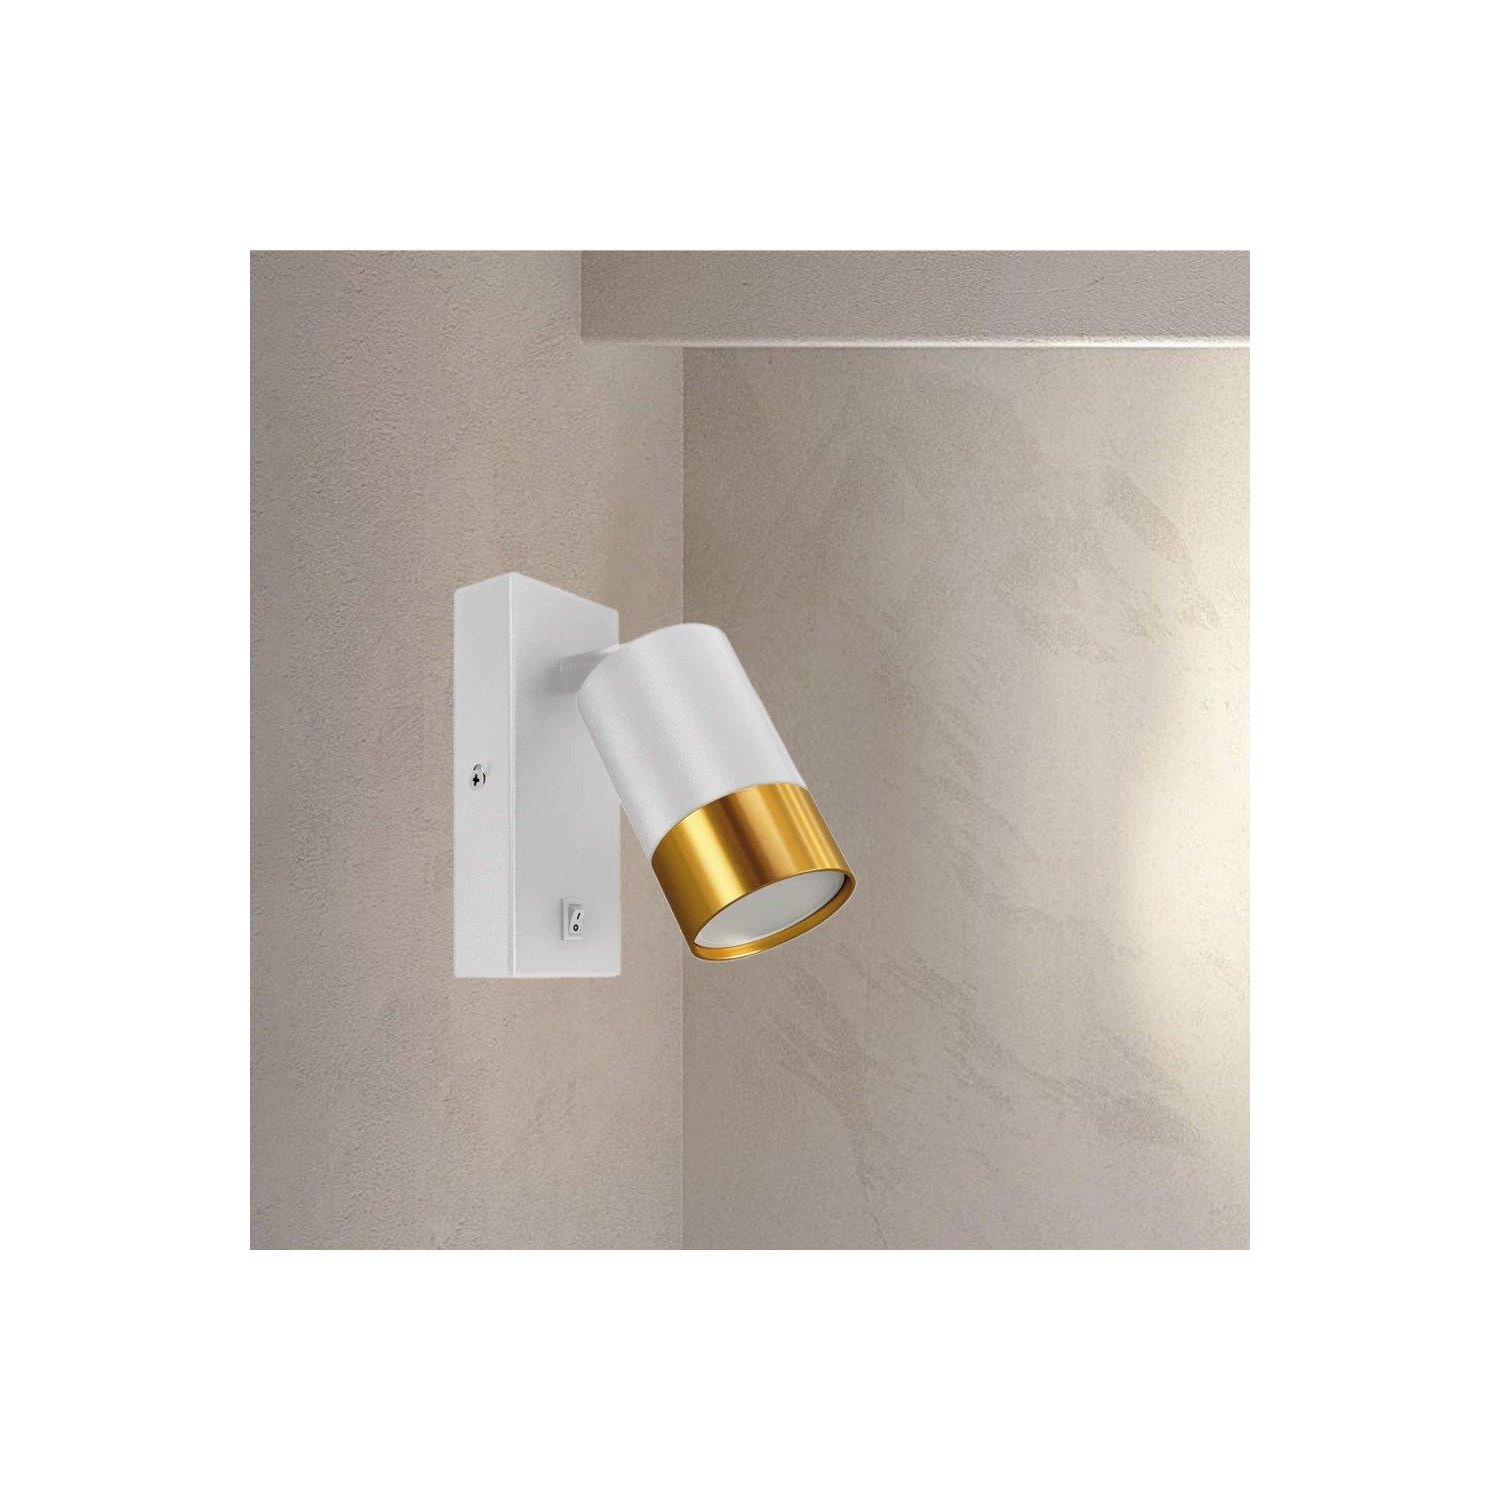 'Puzon'  White & Gold GU10 Adjustable Single GU10 Spotlight Wall Light with Switch - image 1